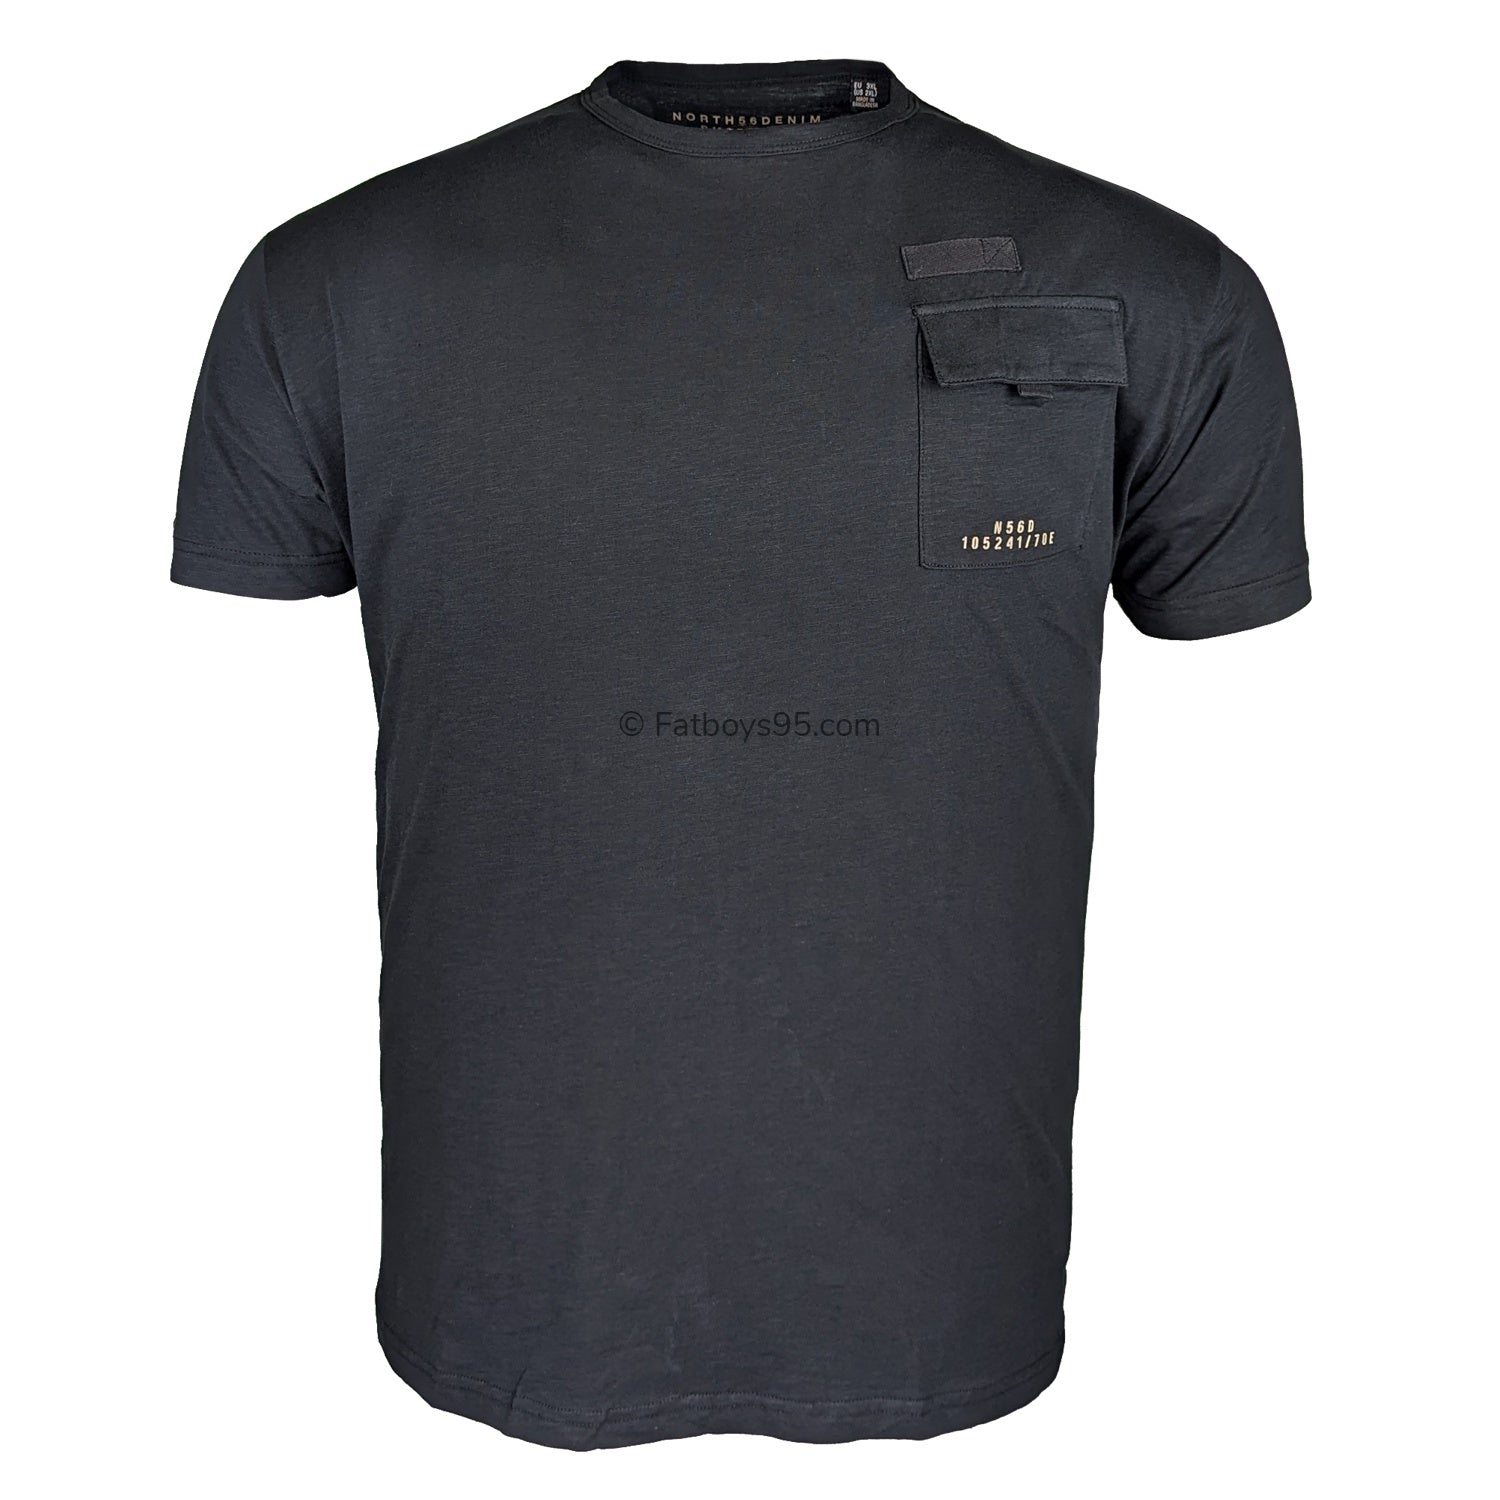 North 56Denim T-Shirt - 33301 - Black 1